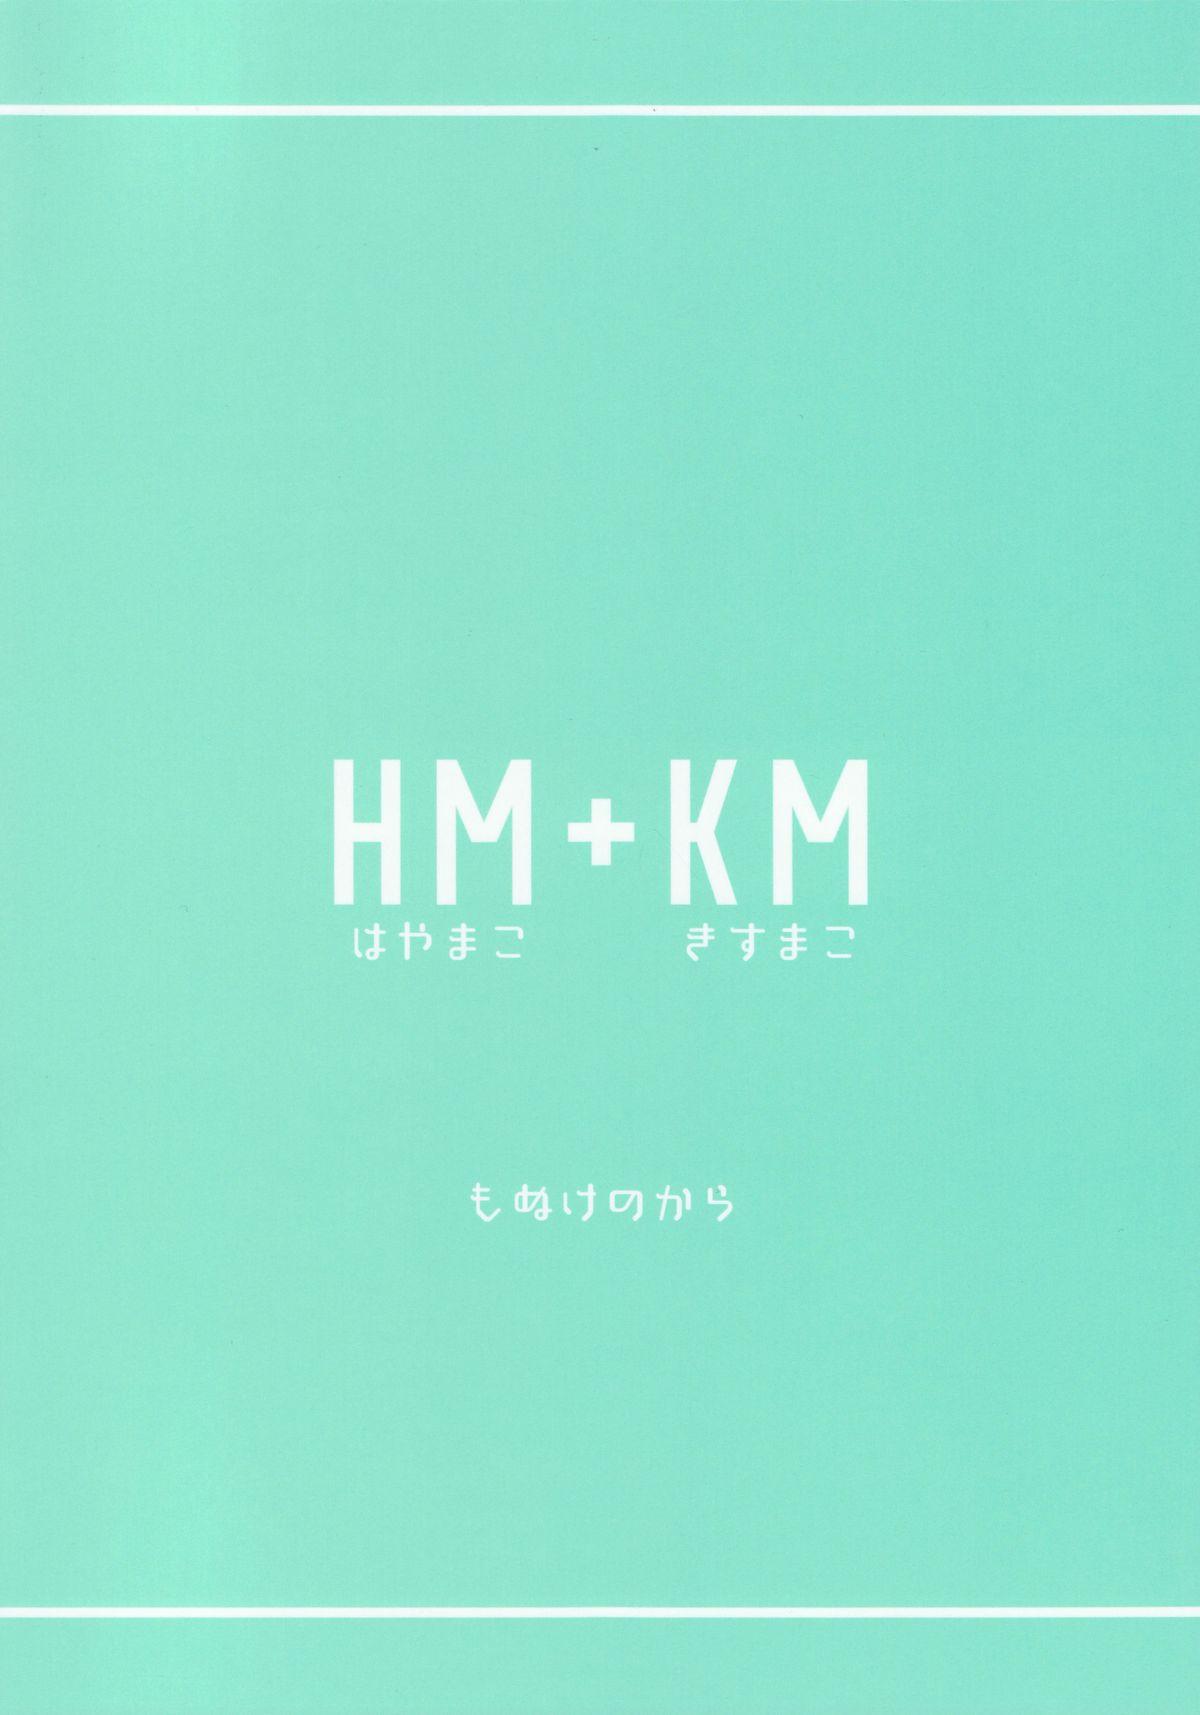 HM + KM 33